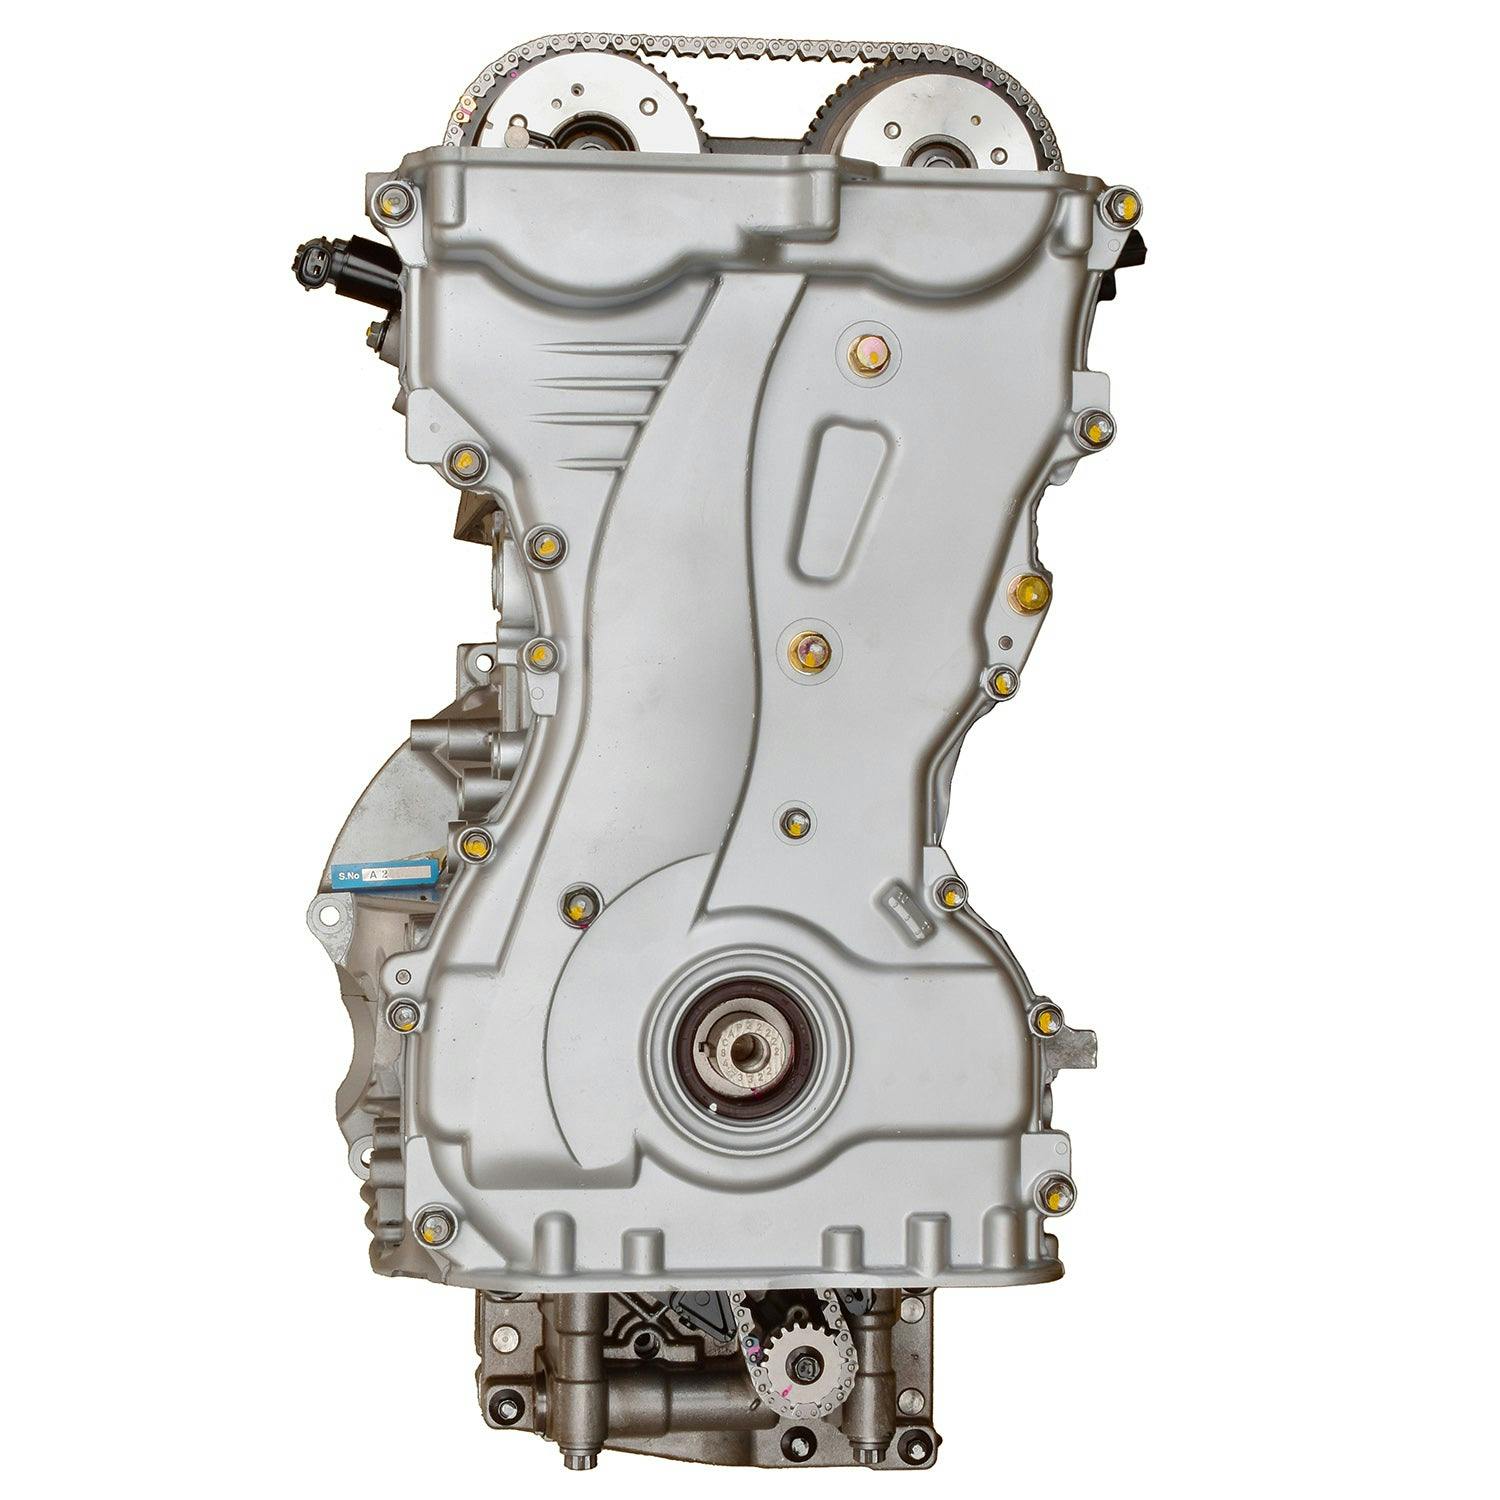 2.4L Inline-4 Engine for 2011-2013 Kia Forte/Forte Koup/Rondo